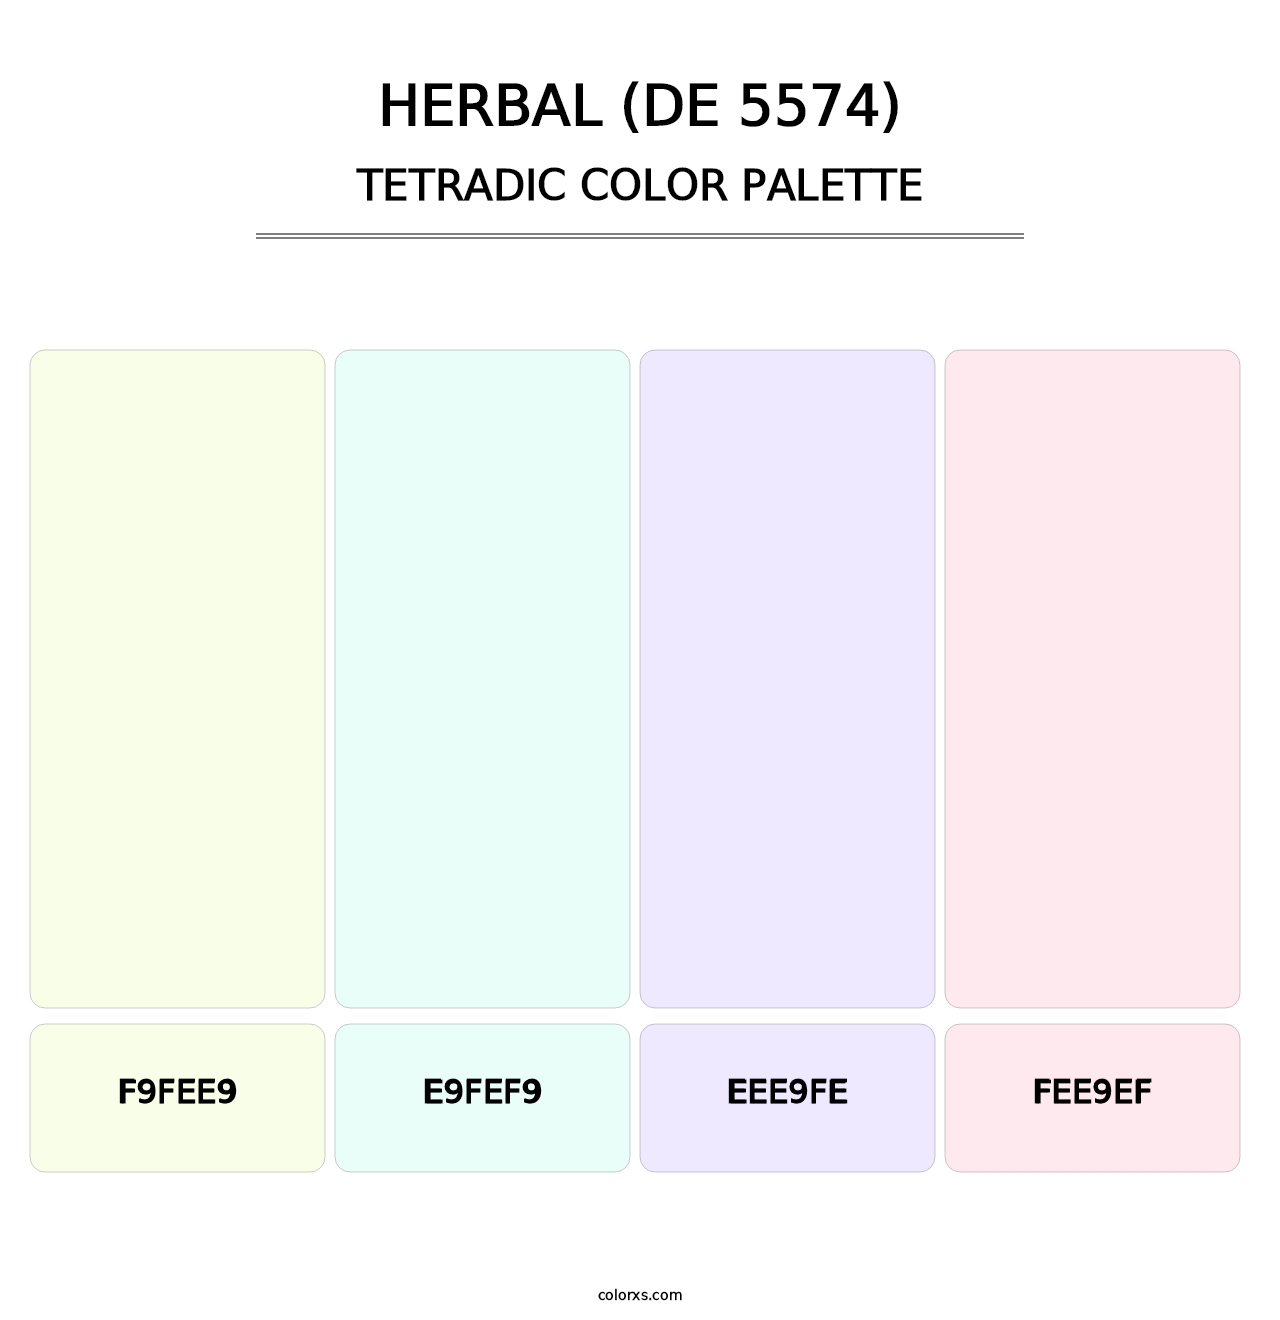 Herbal (DE 5574) - Tetradic Color Palette